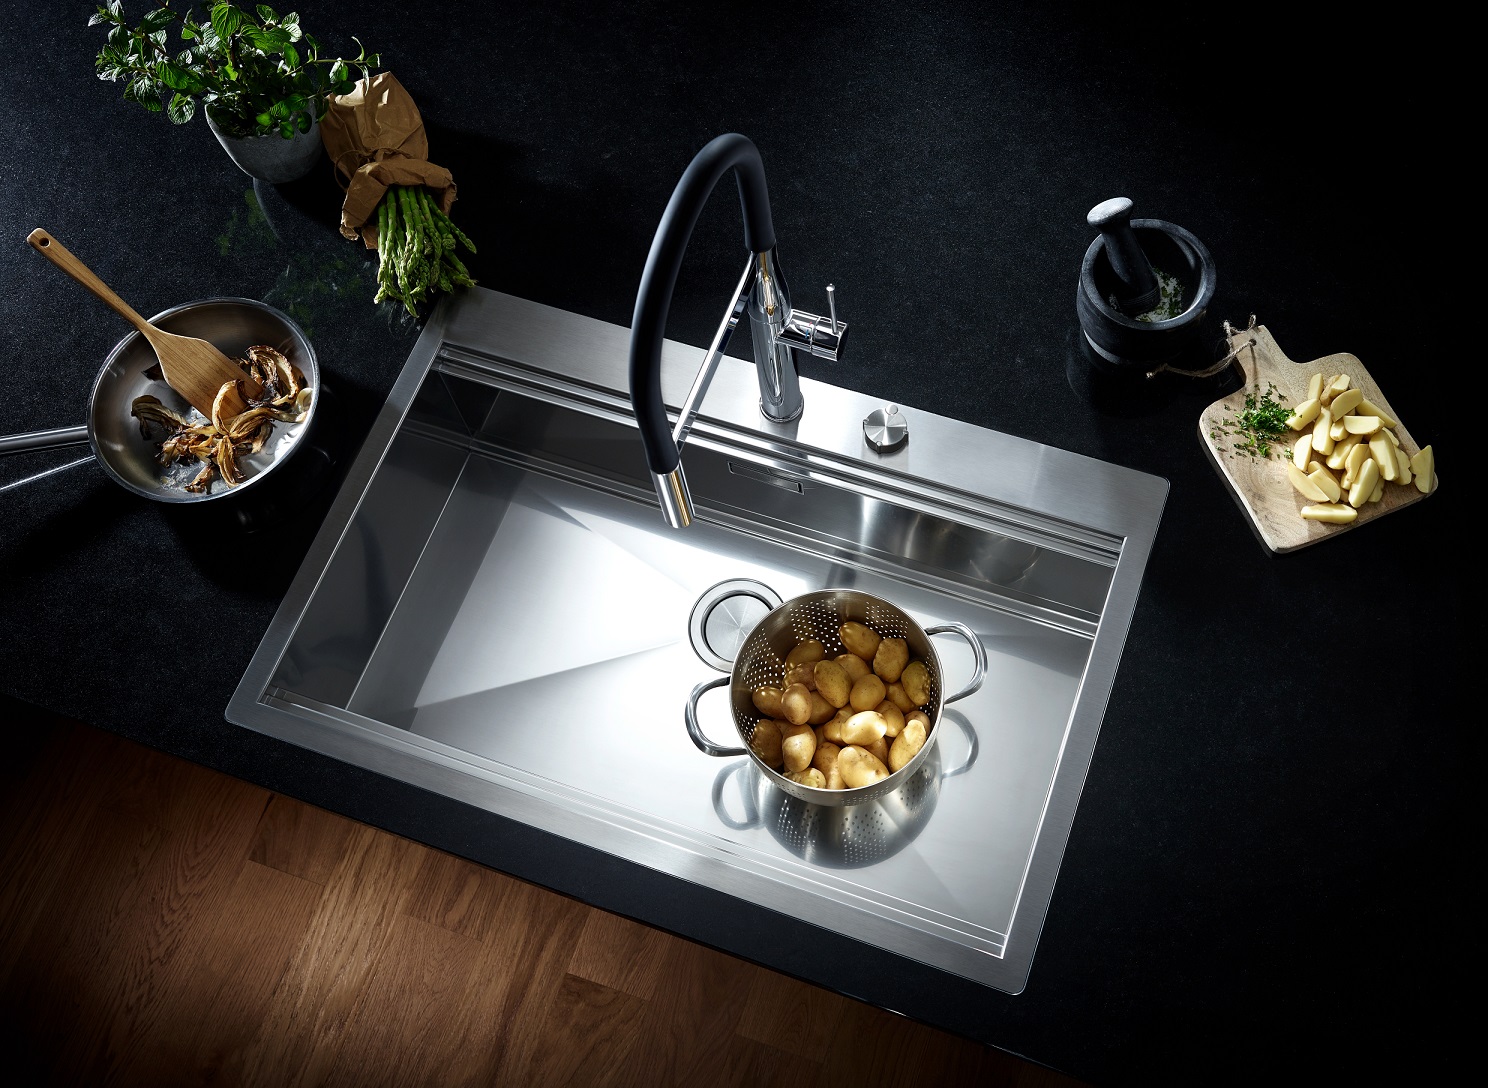 grohe k500 stainless steel kitchen sink